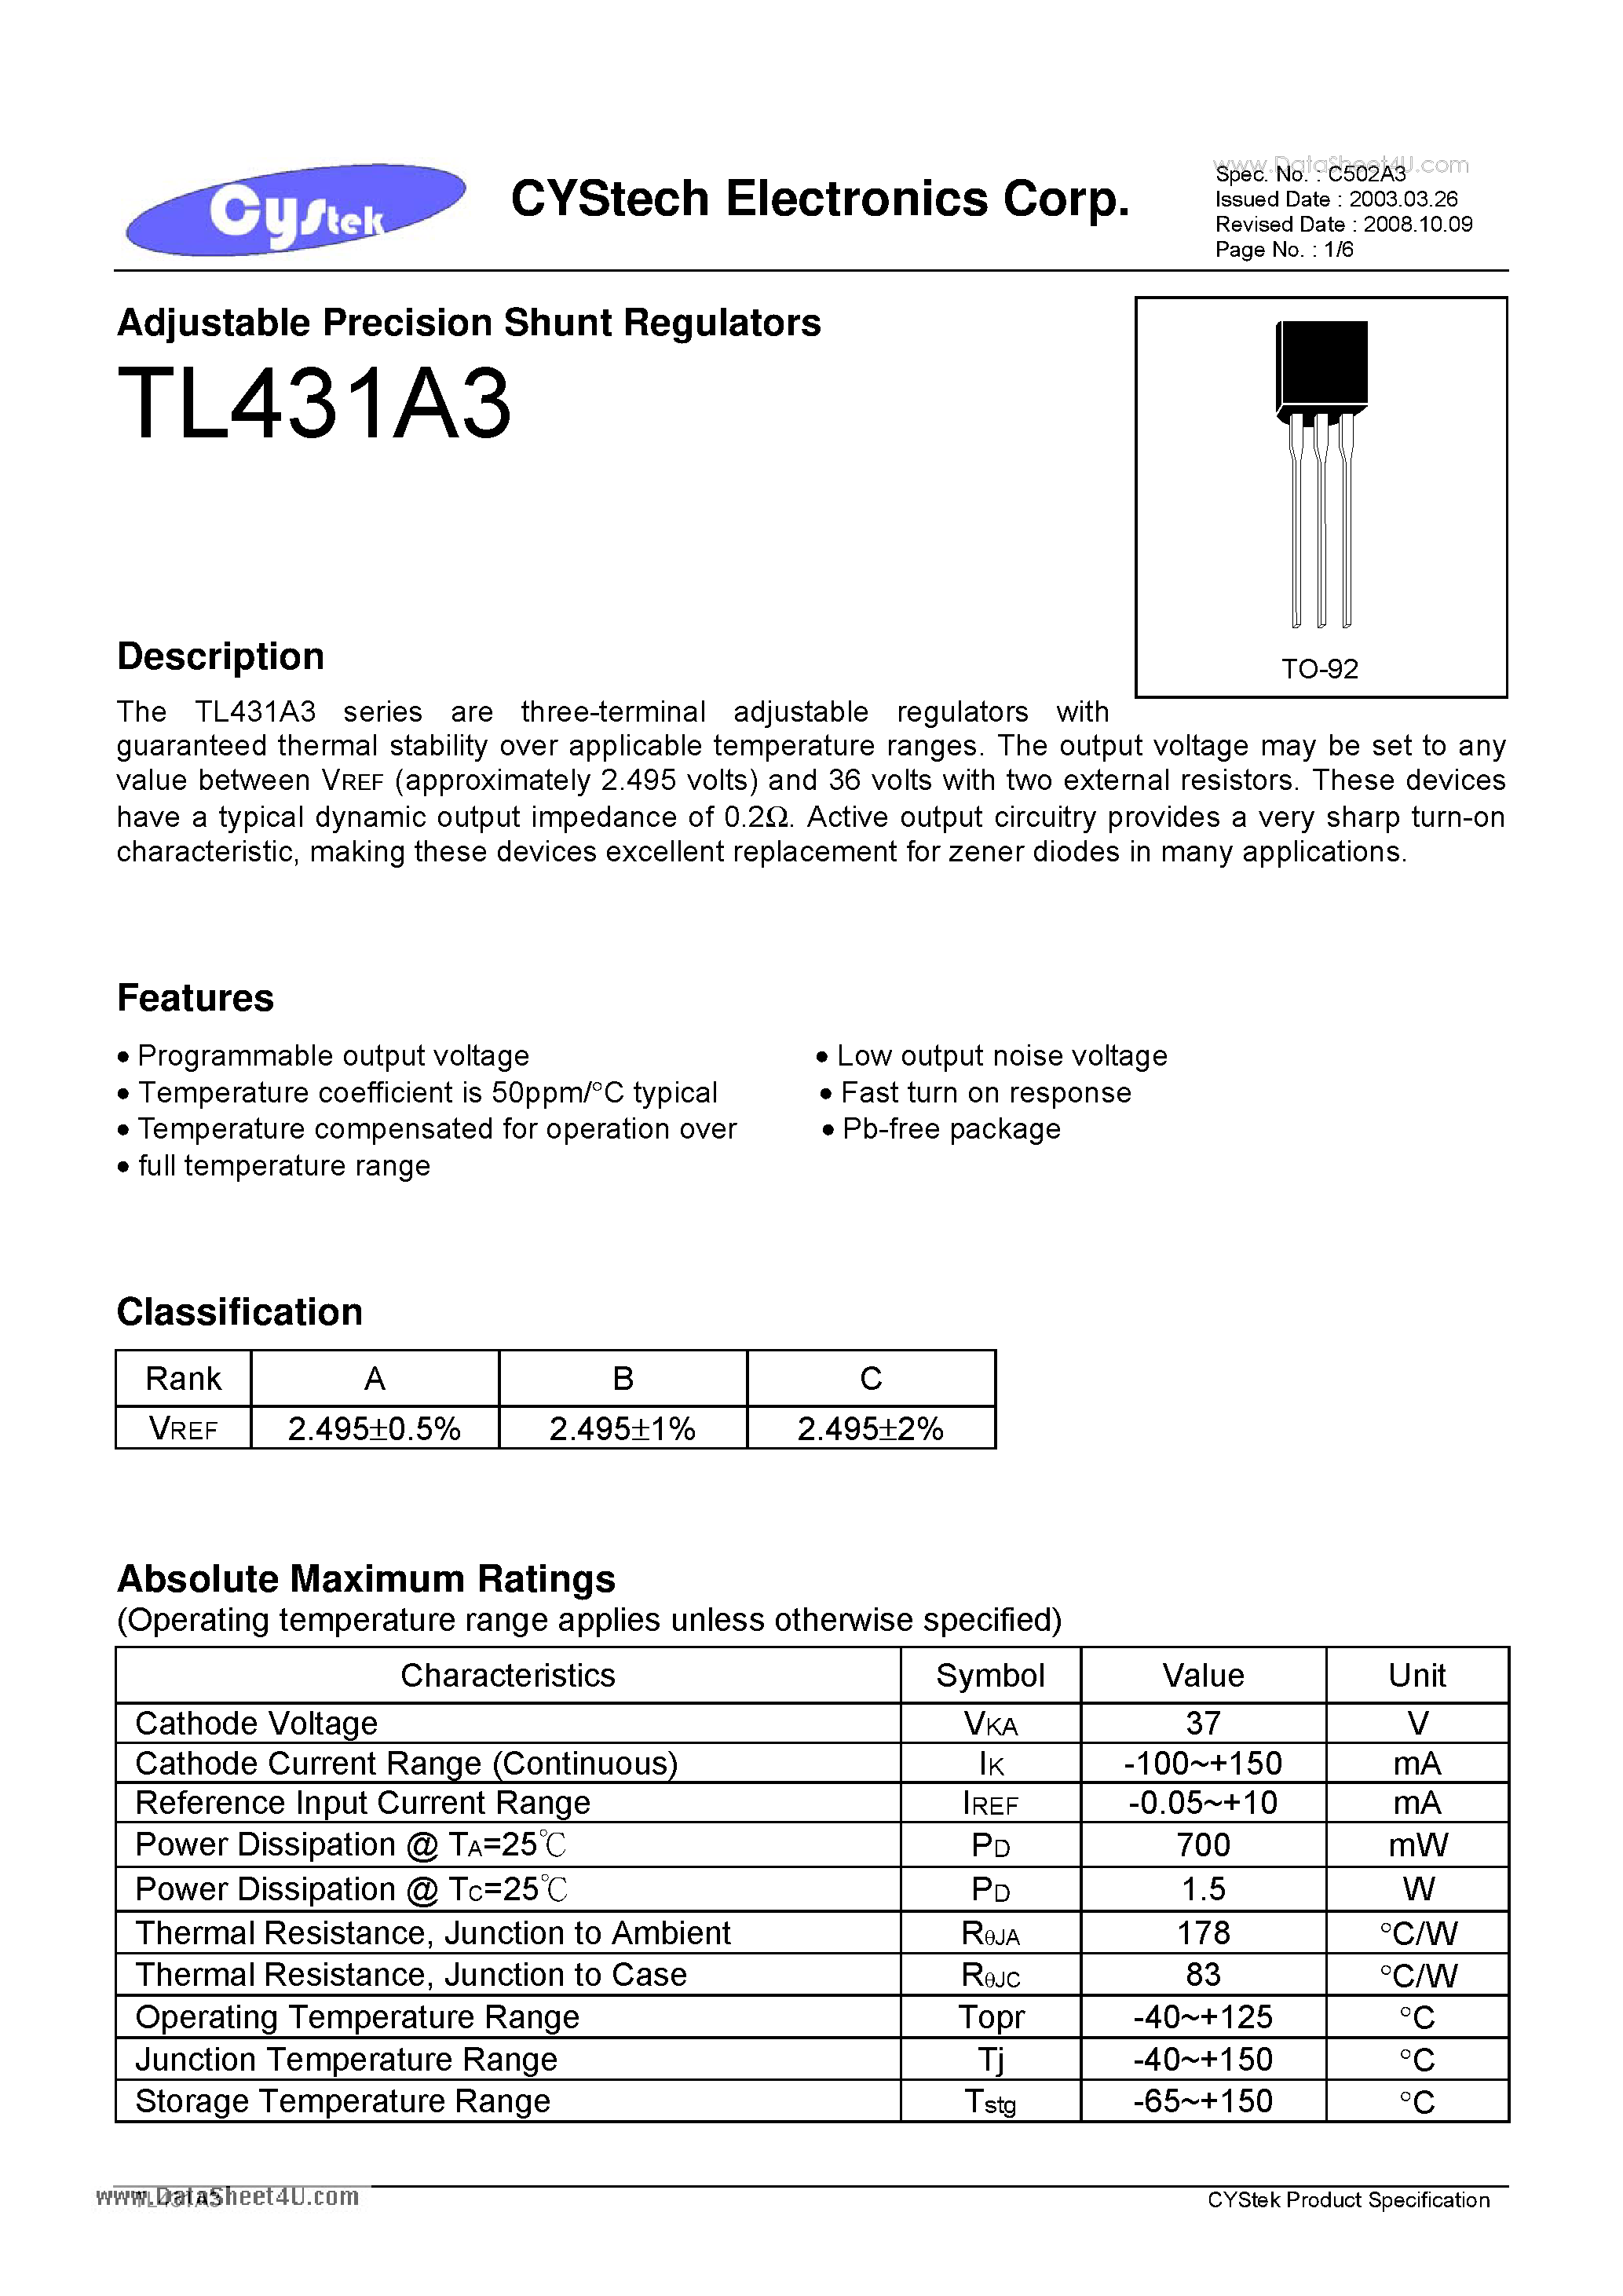 Даташит TL431A3 - Adjustable Precision Shunt Regulators страница 1